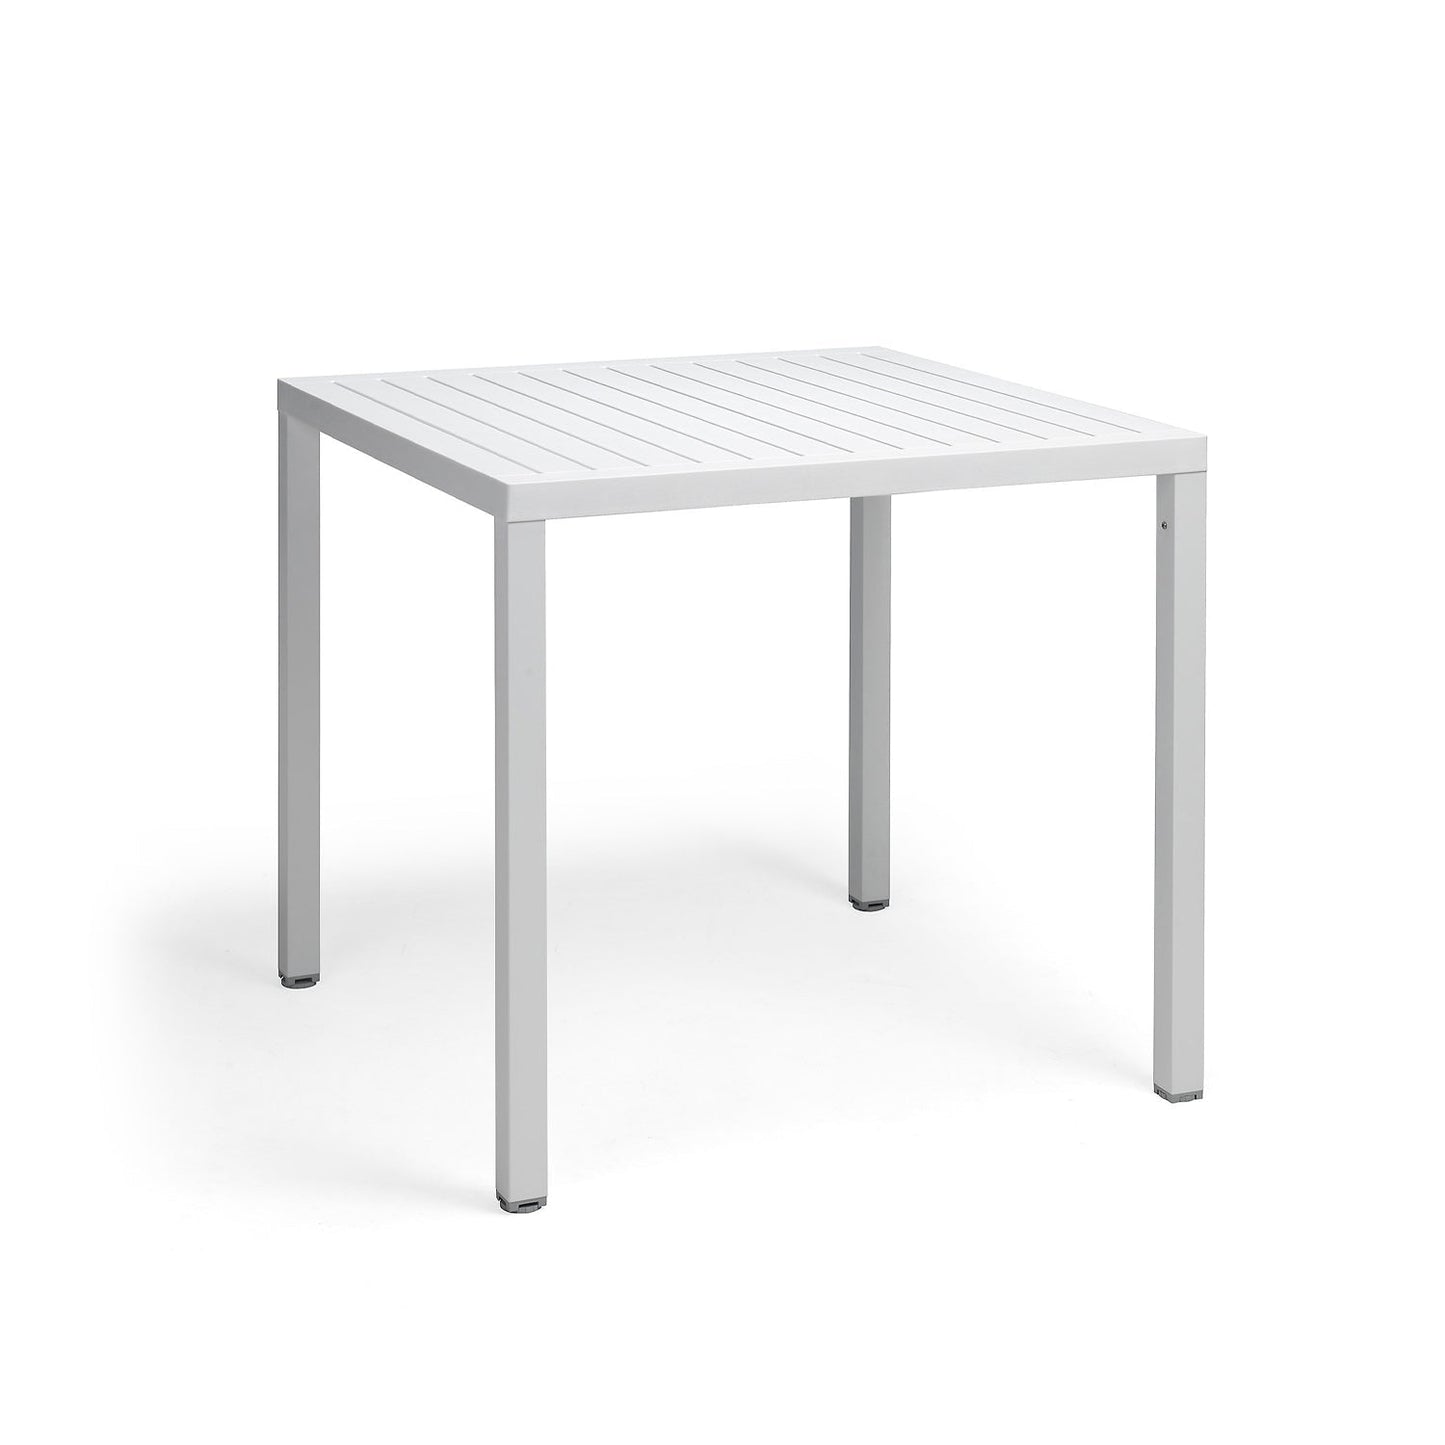 Cube 80 Garden Table In White